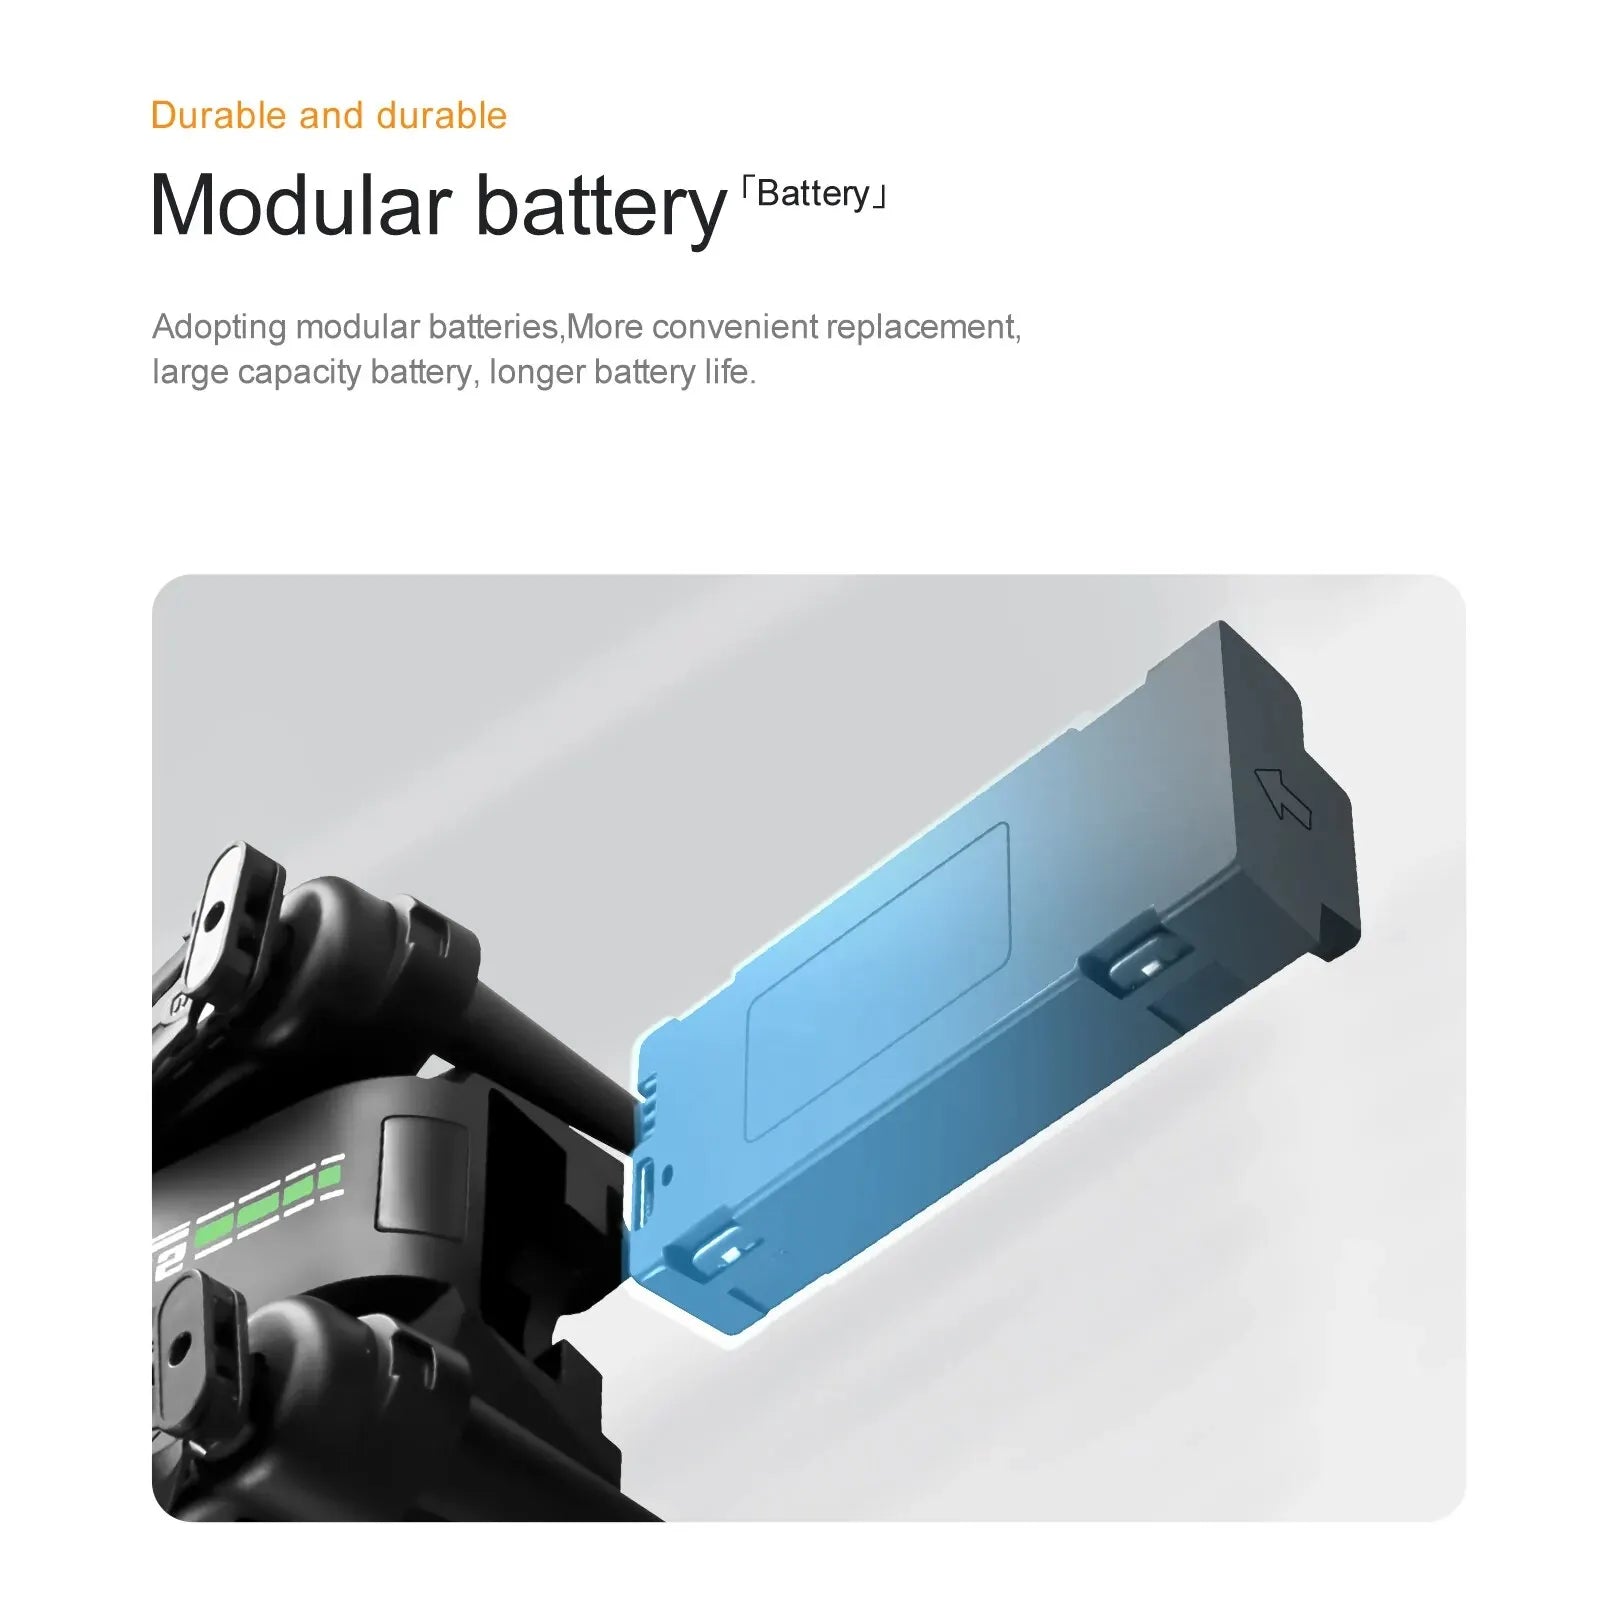 S92 Drone, durable and durable modular battery "batterys adopting modular batteries